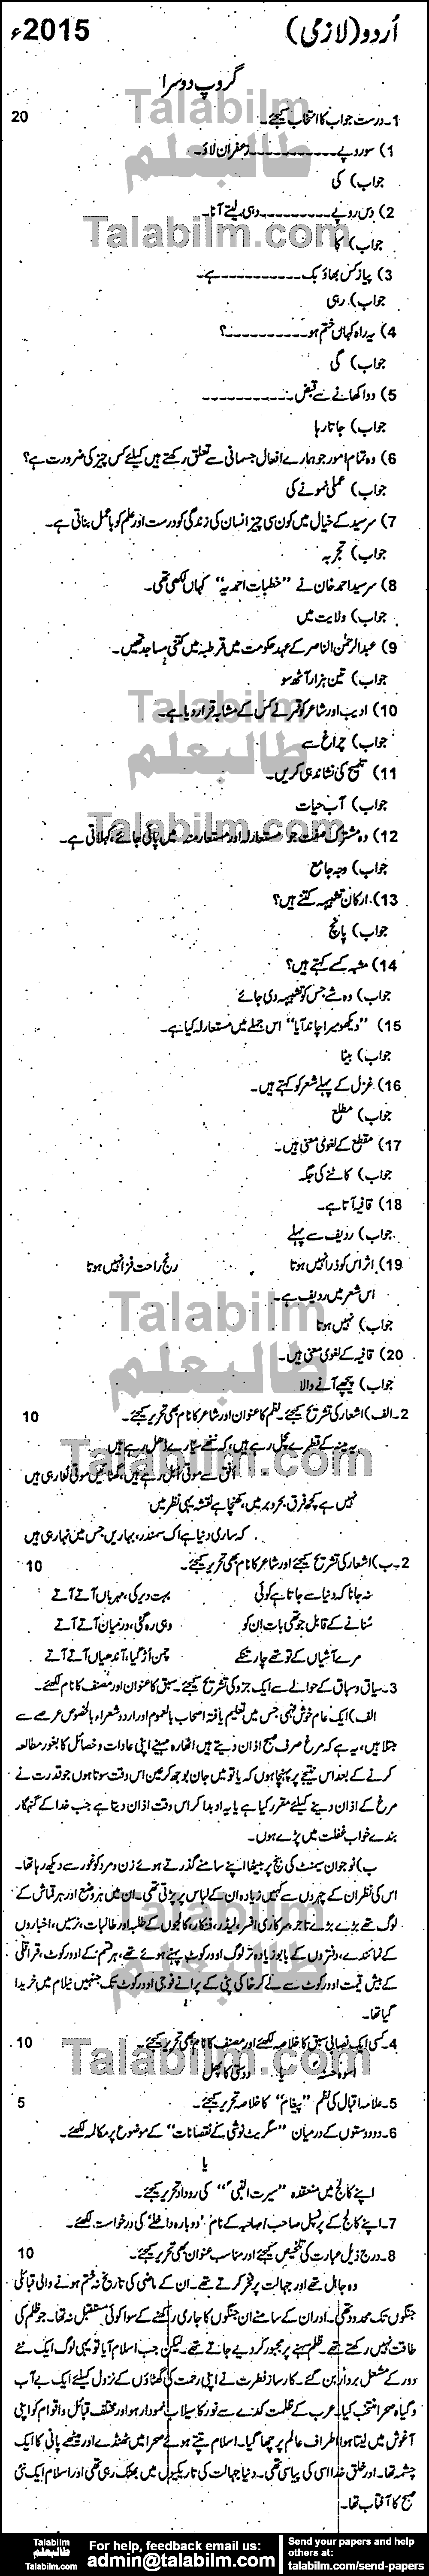 Urdu 0 past paper for Group-II 2015